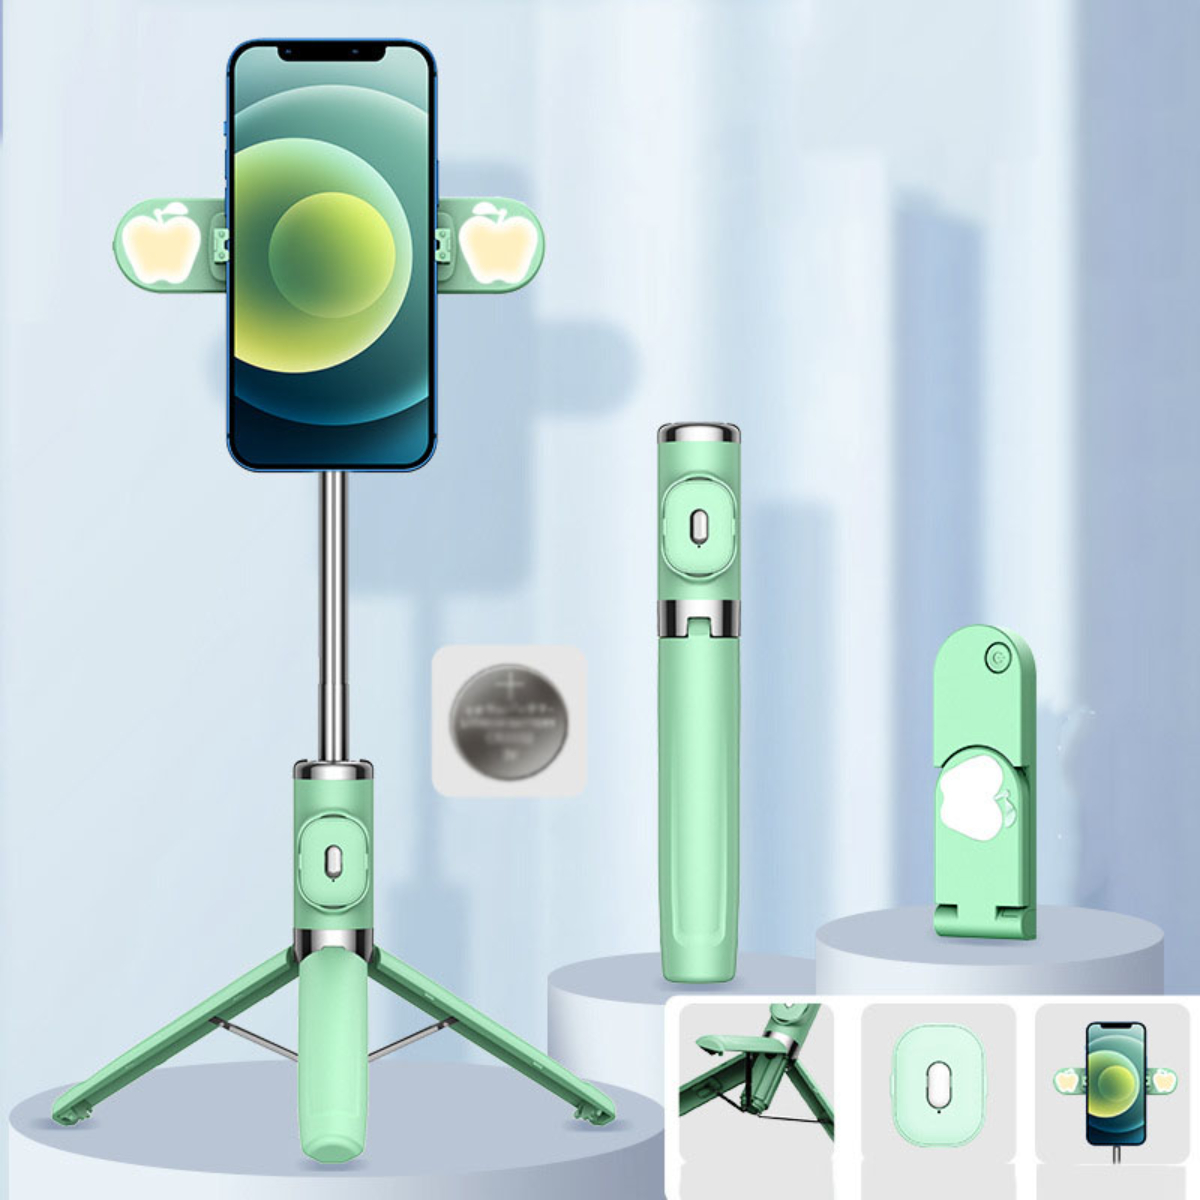 Dual Selbstauslöser, Grün Handy komplementäre Stick Selfie Multi-Funktion, ENBAOXIN Halter Fernbedienung Bluetooth Lichter -